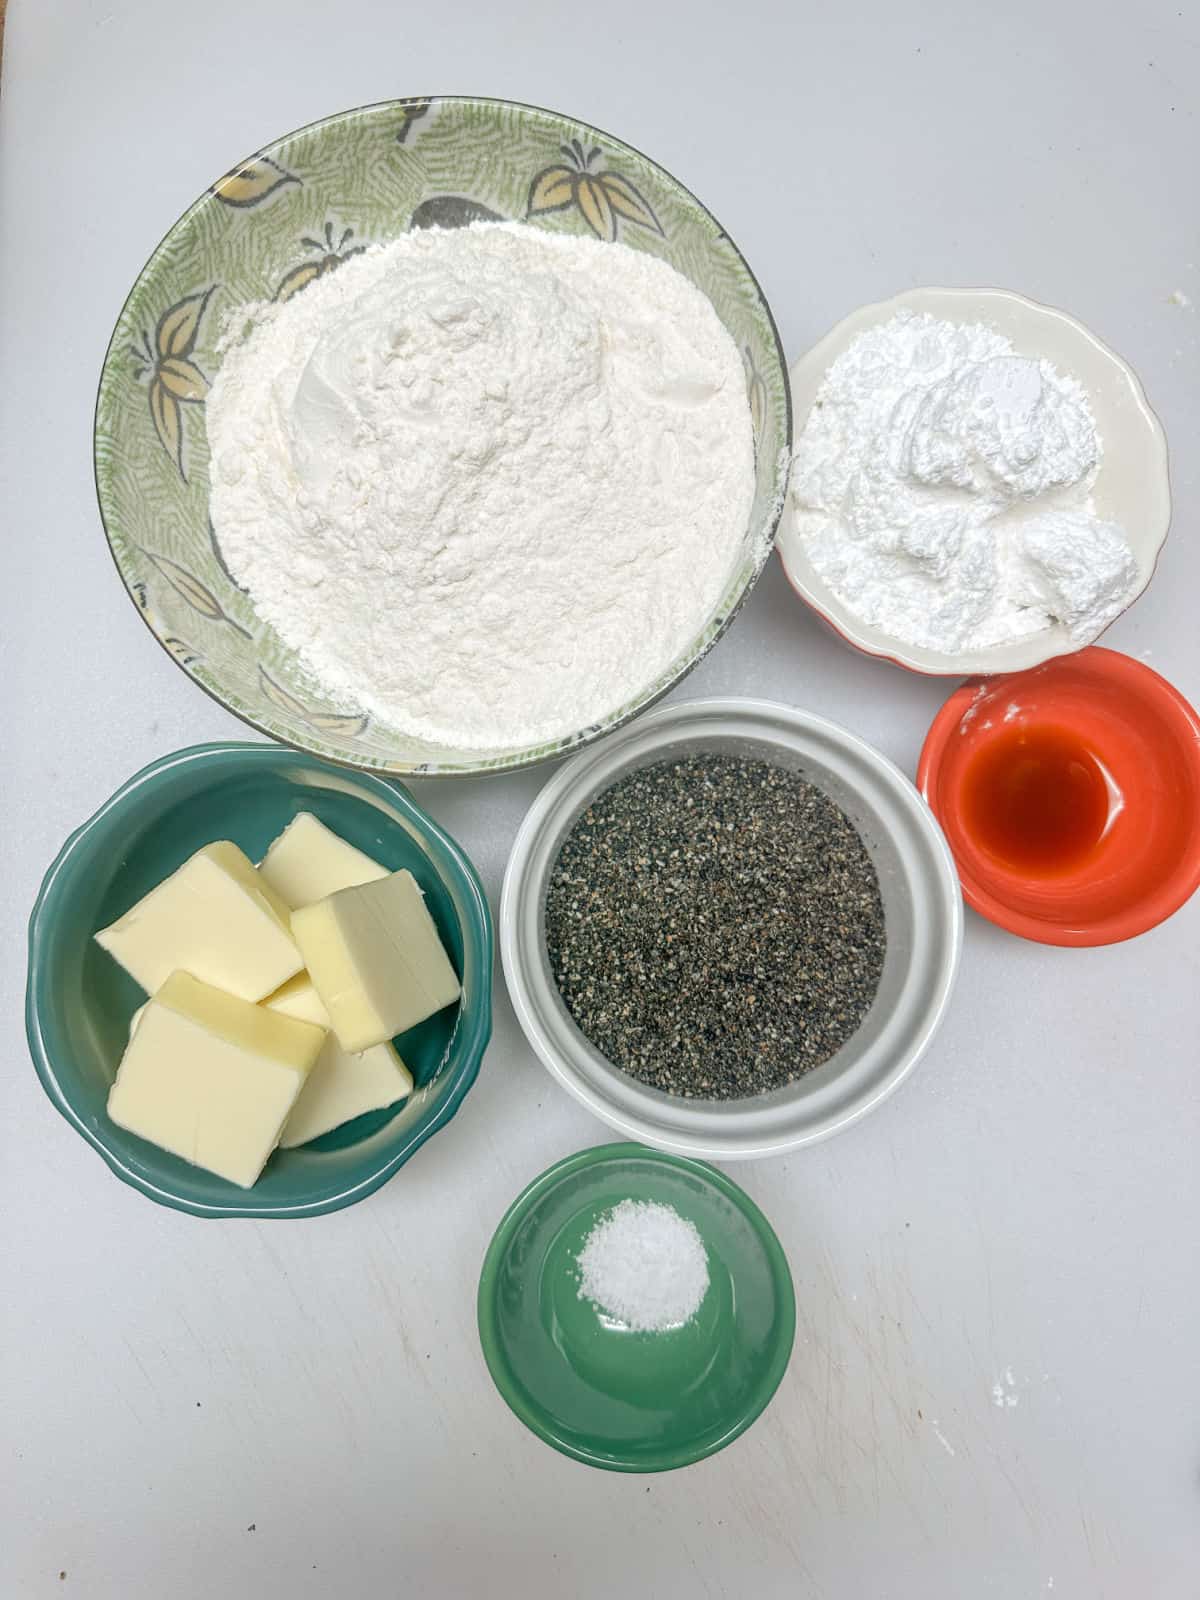 bowls of ingredients for black sesame seed shortbread